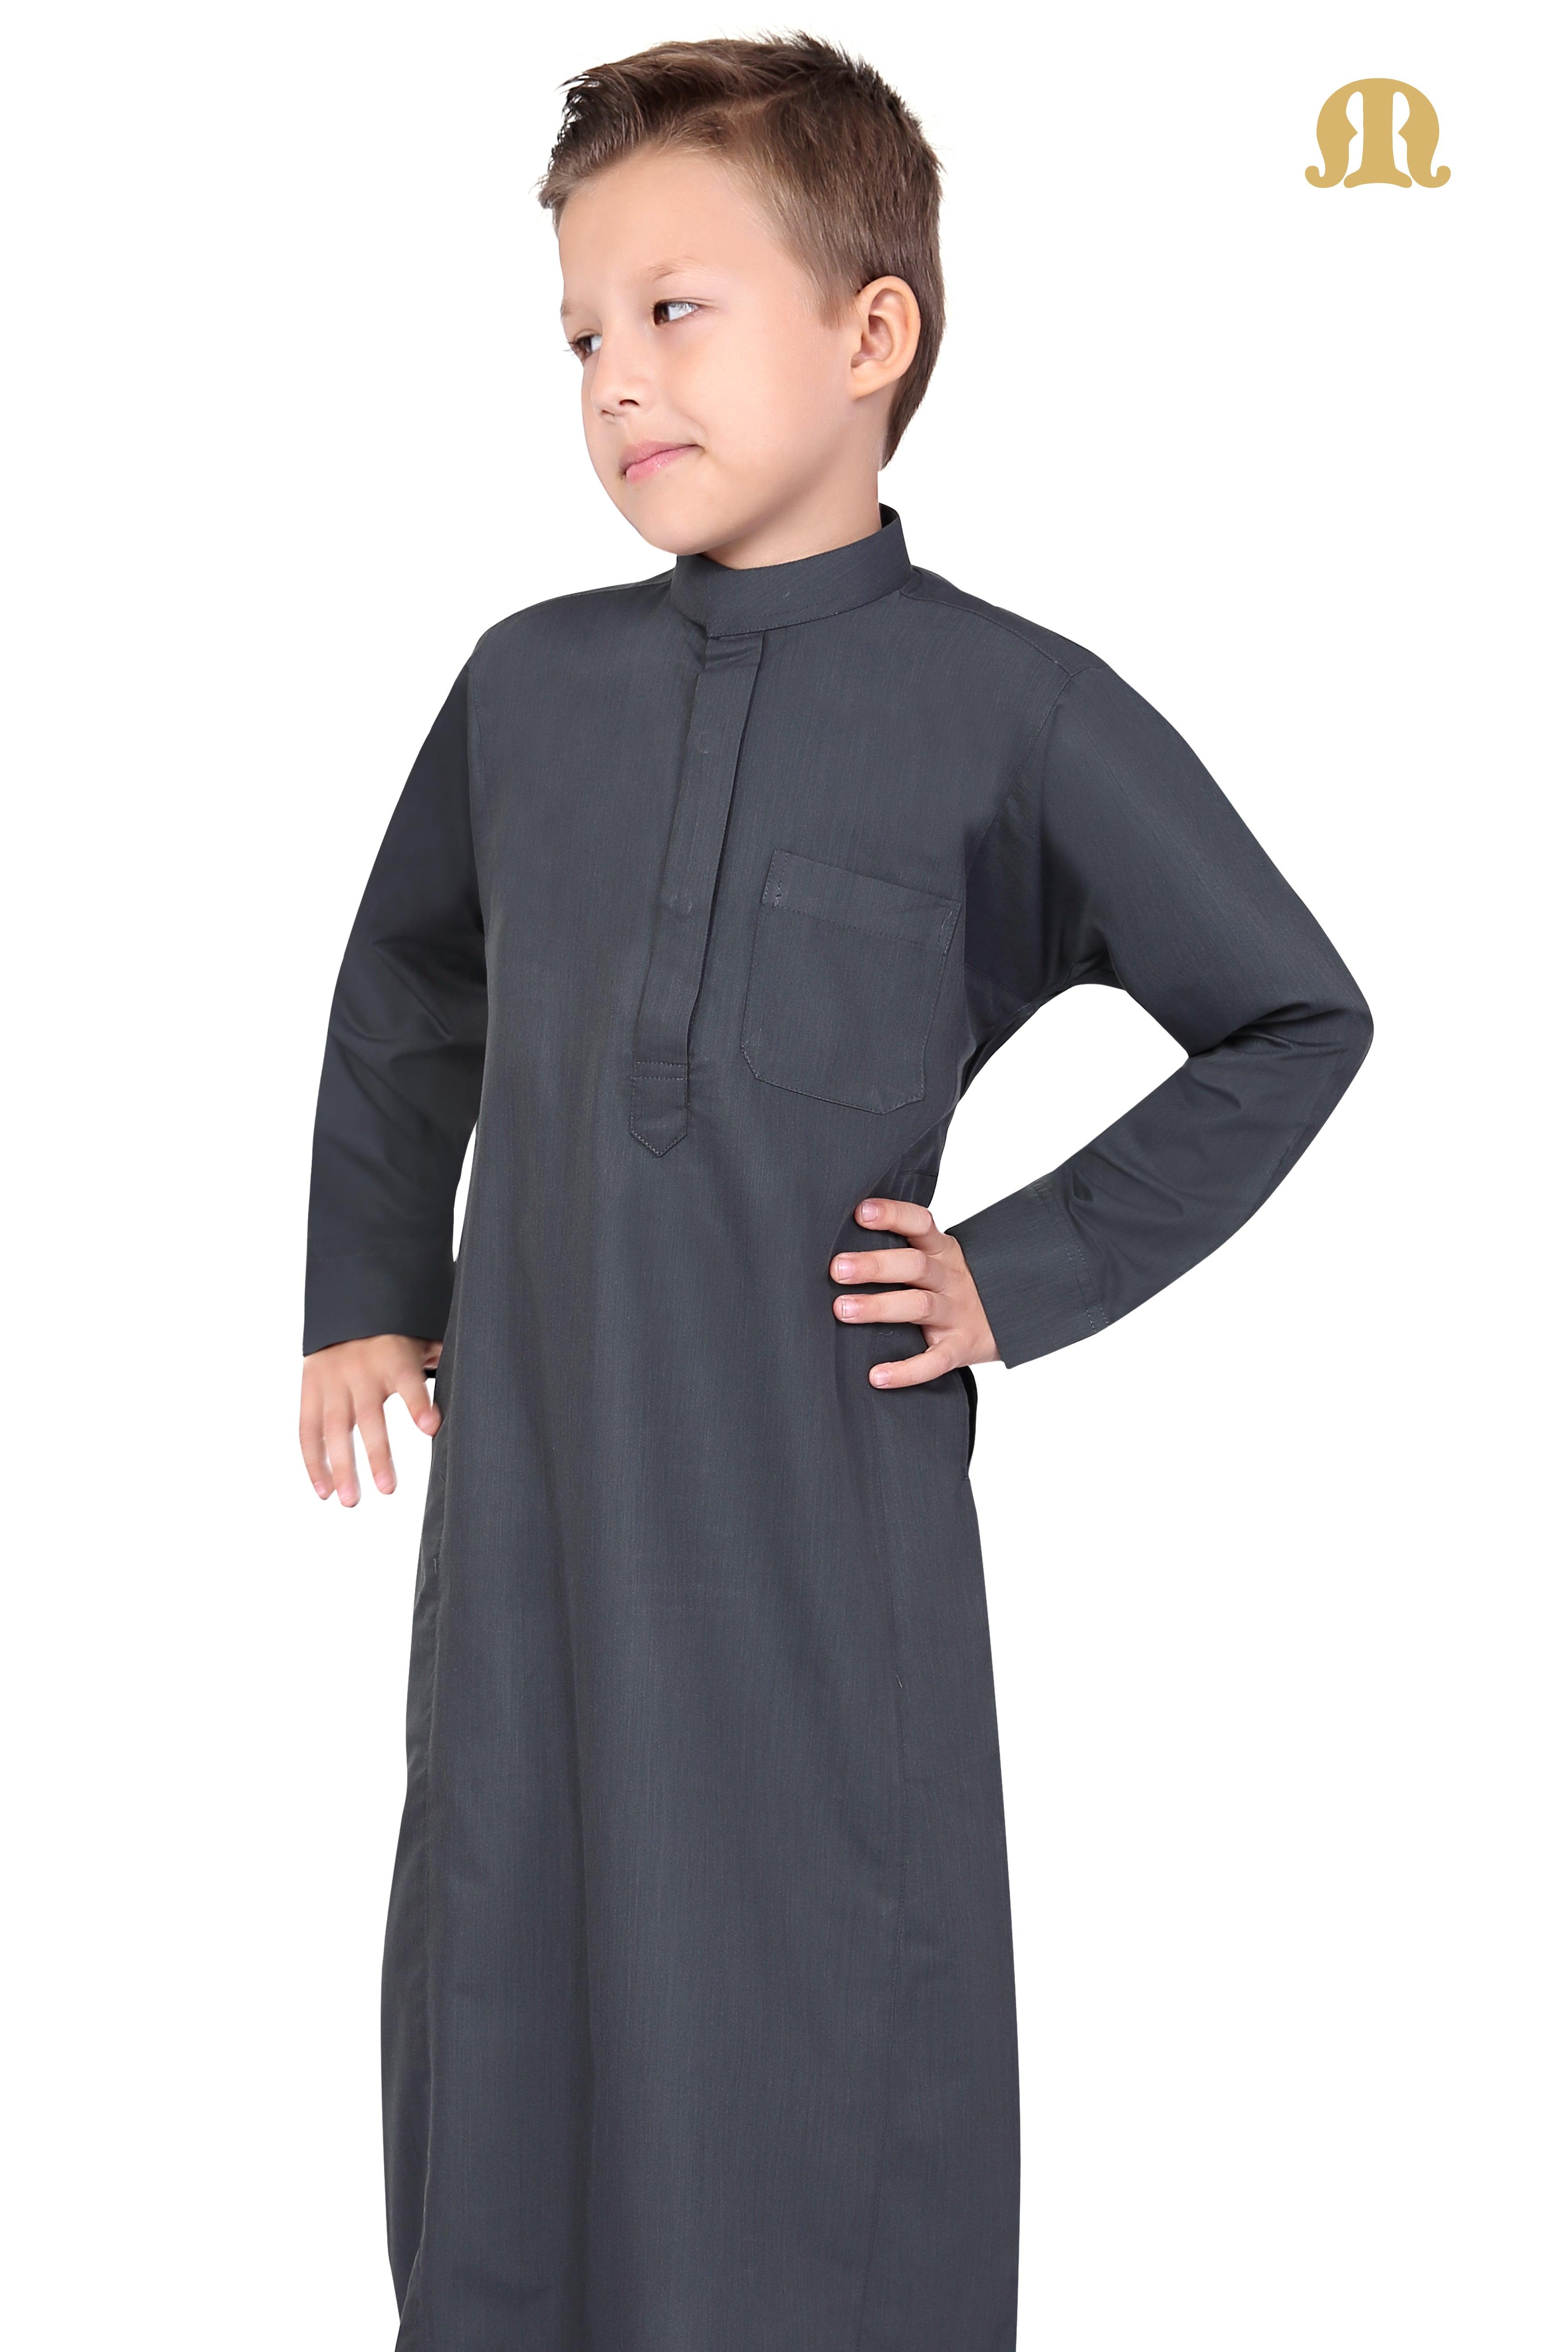 Grey Aplos Saudi Thobe for Kids - Mashroo